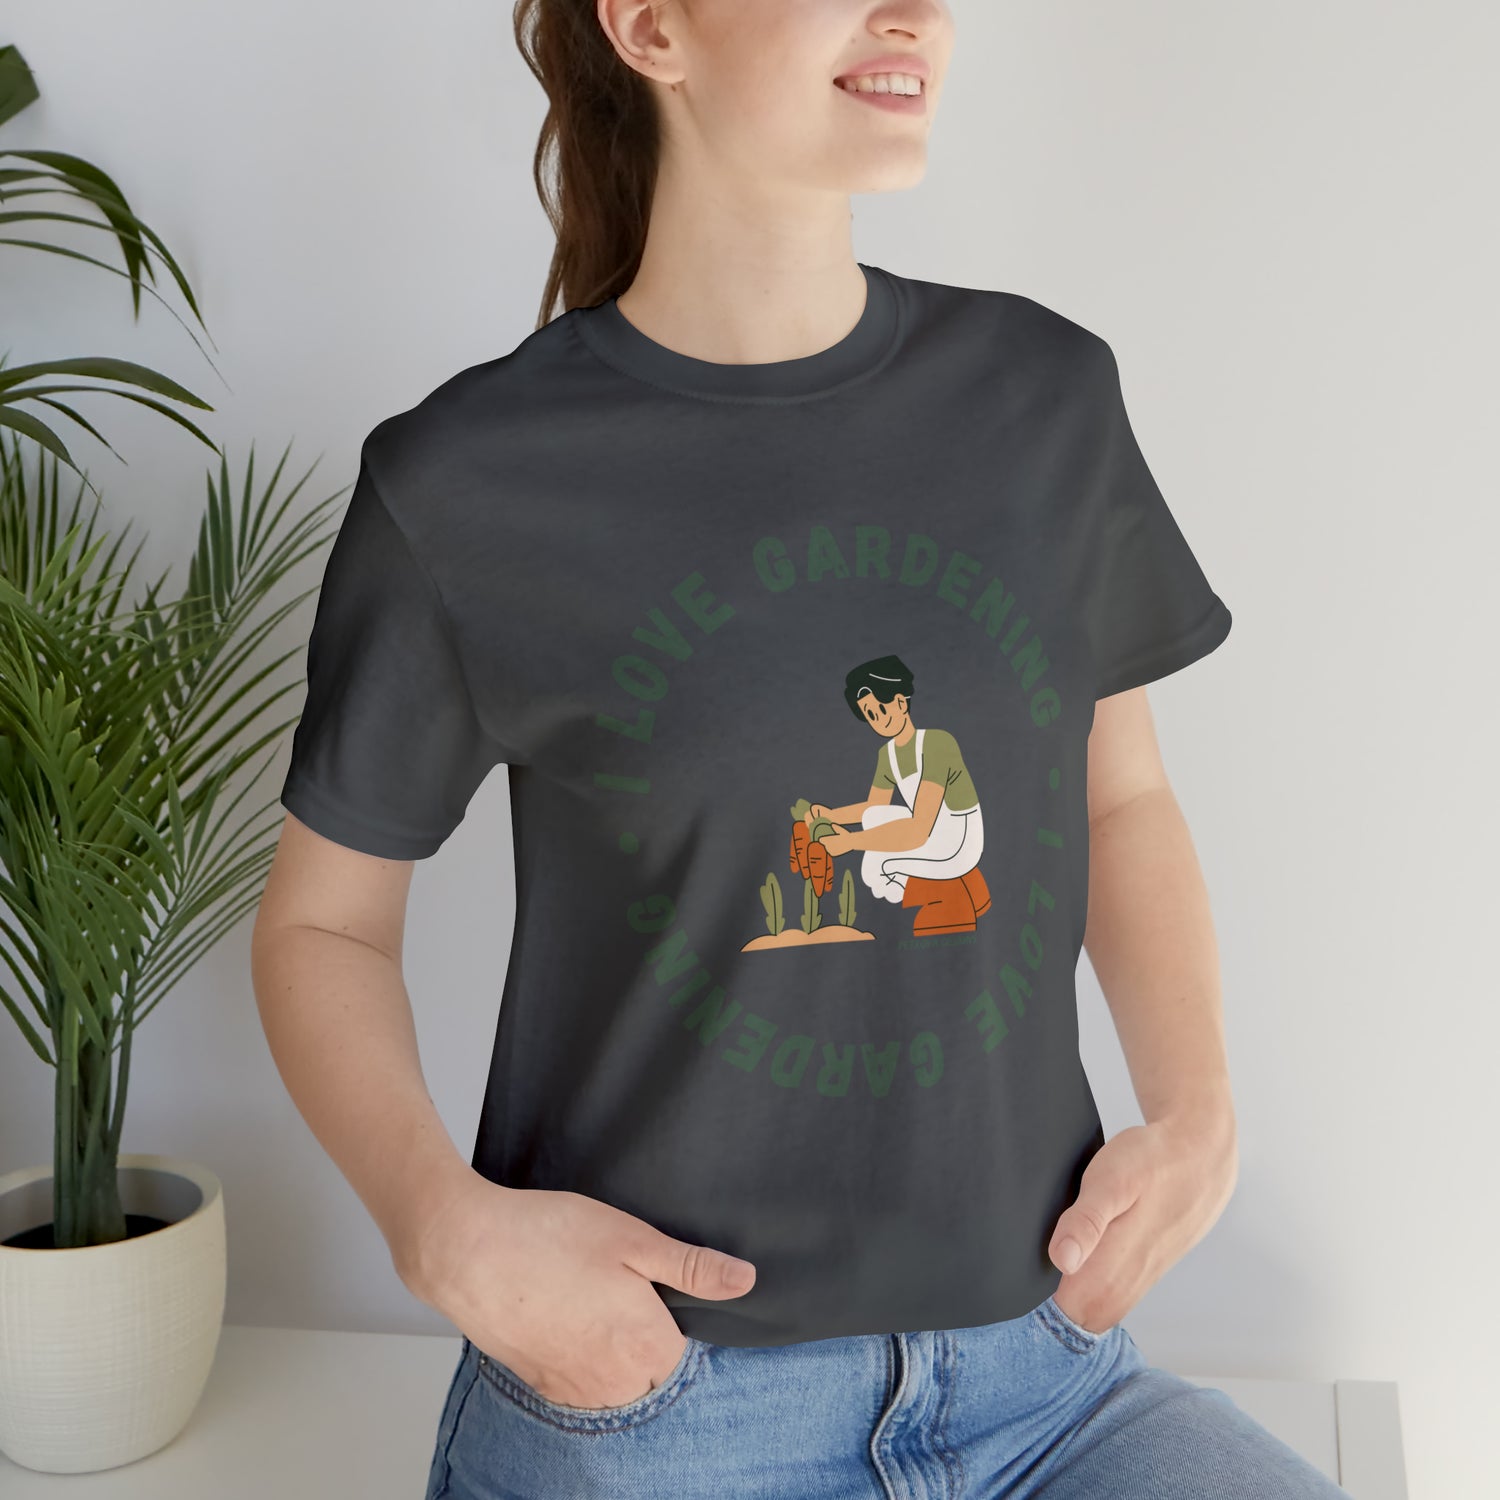 Asphalt T-Shirt Tshirt Design Gift for Friend and Family Short Sleeved Shirt Petrova Designs